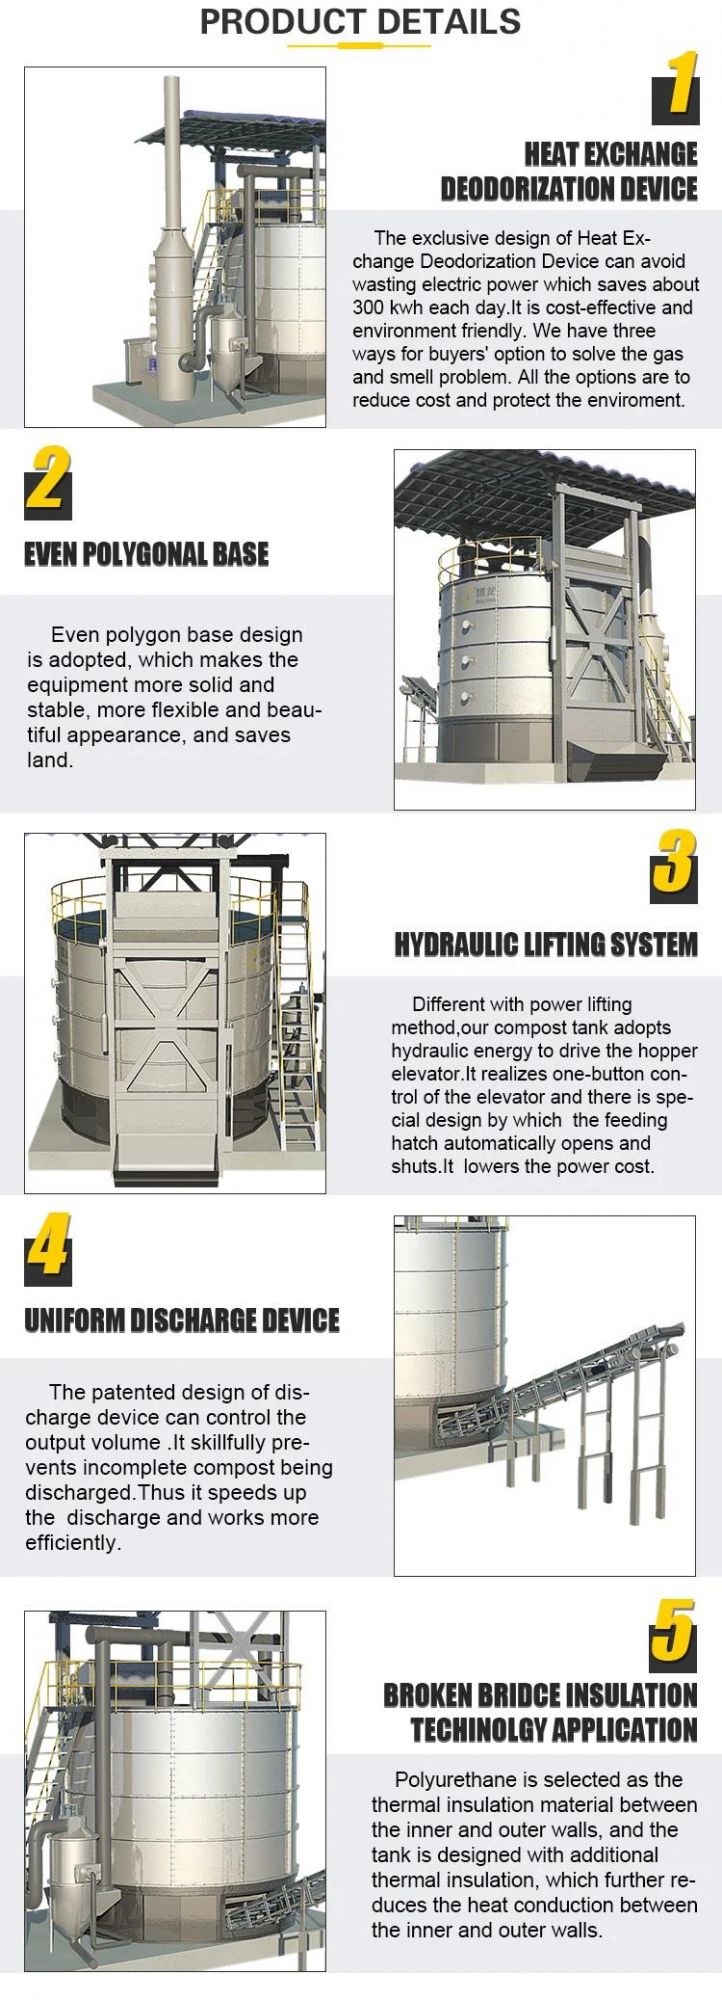 Dry and Wet Separator Animal Manure Fermentation Tank Manure Treatment Equipment